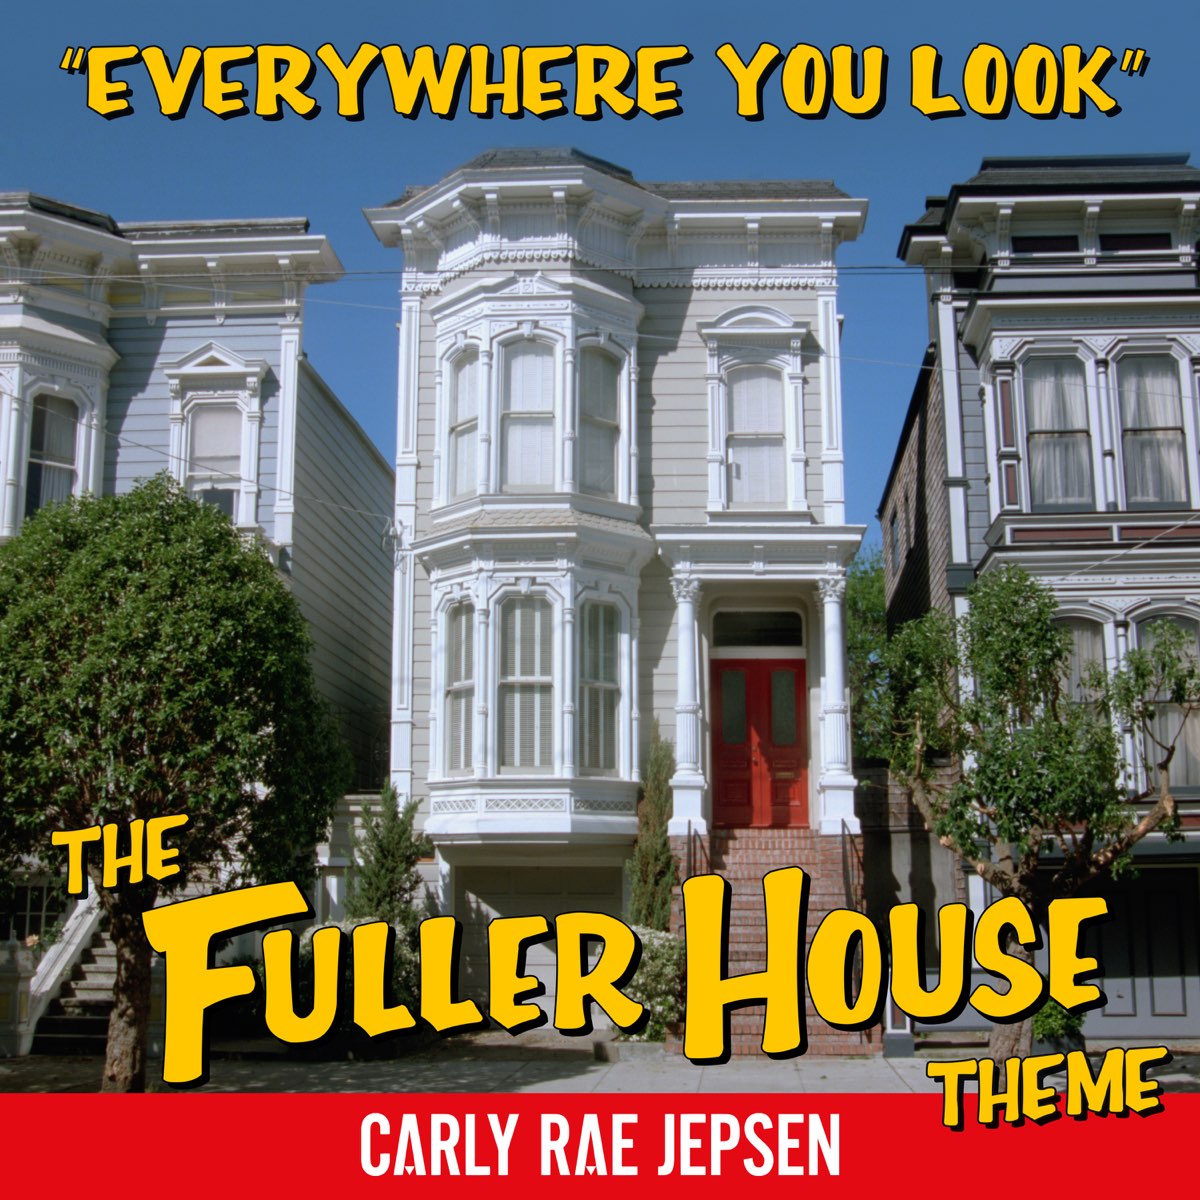 Fuller House Brings Smiles and Memories Everywhere You Look